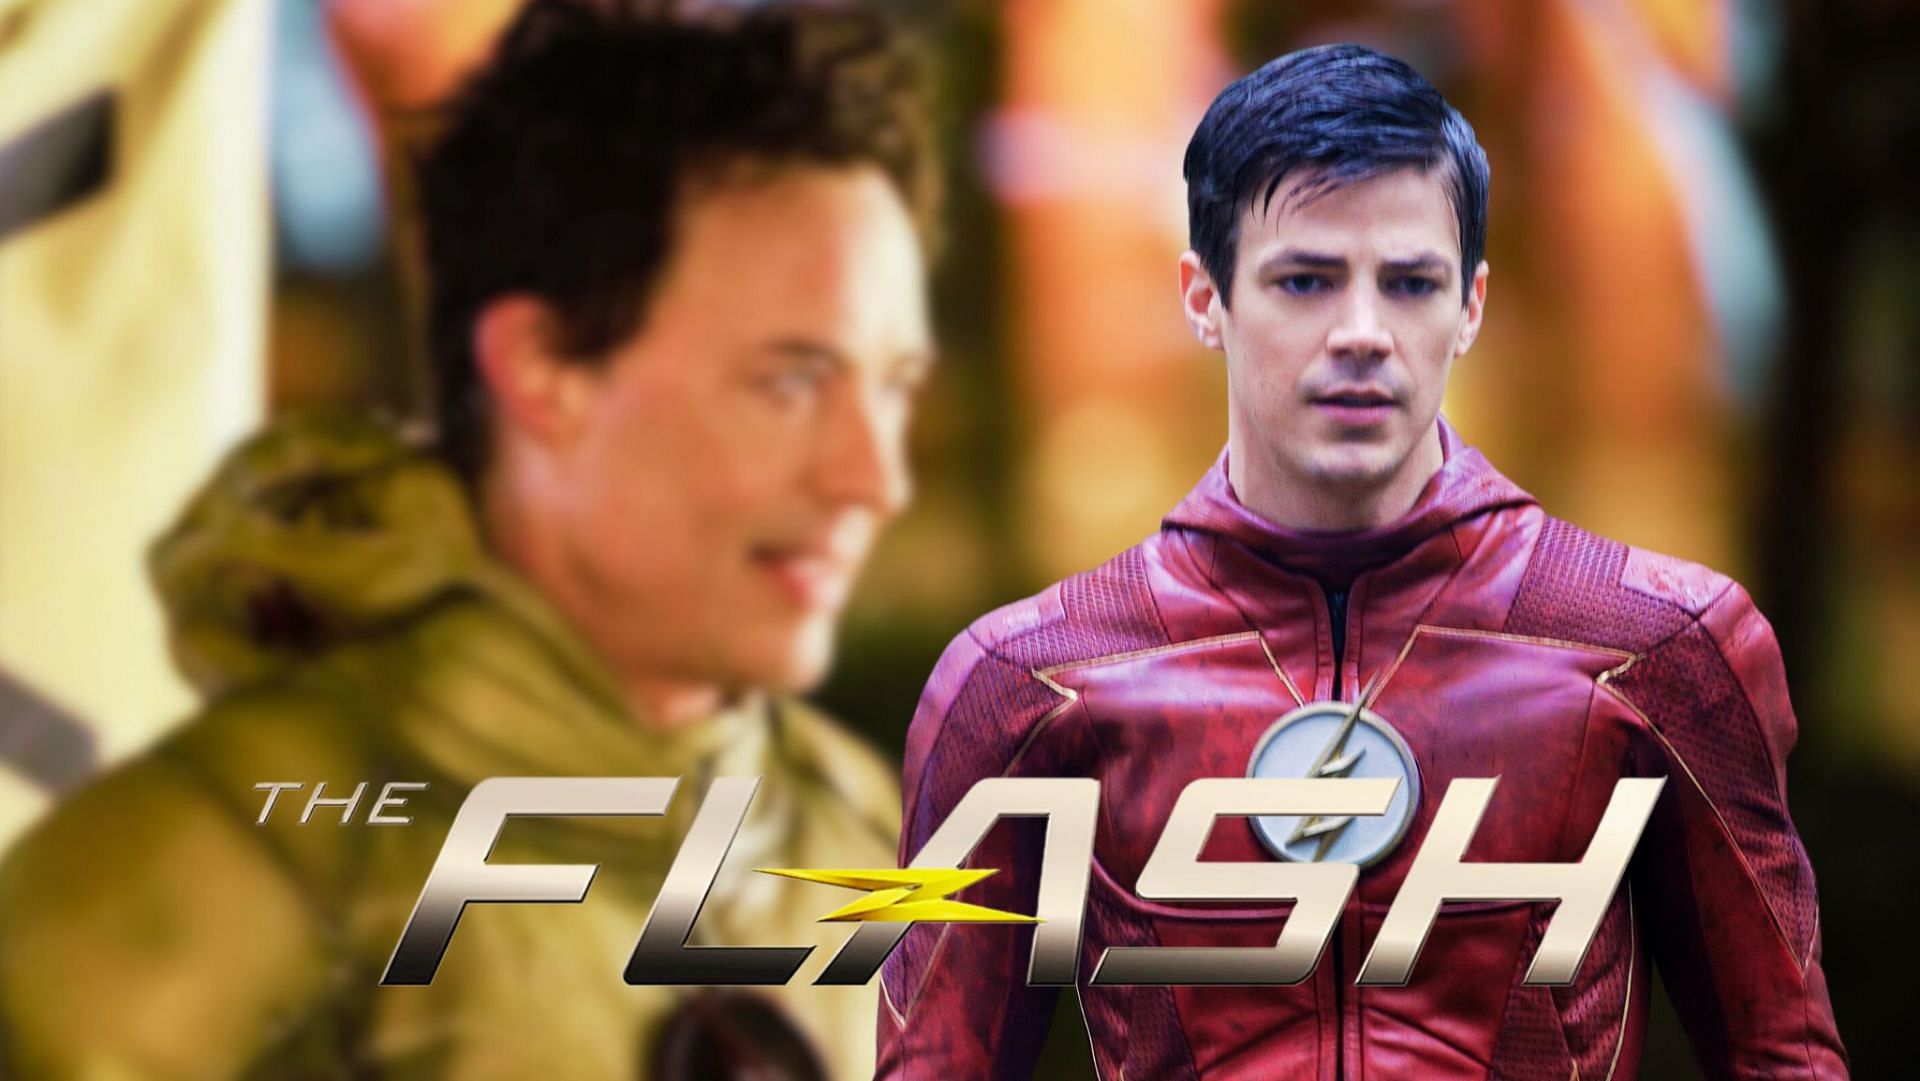 Tom Cavanagh returns as Eobard Thawne, aka the Reverse-Flash, in The Flash